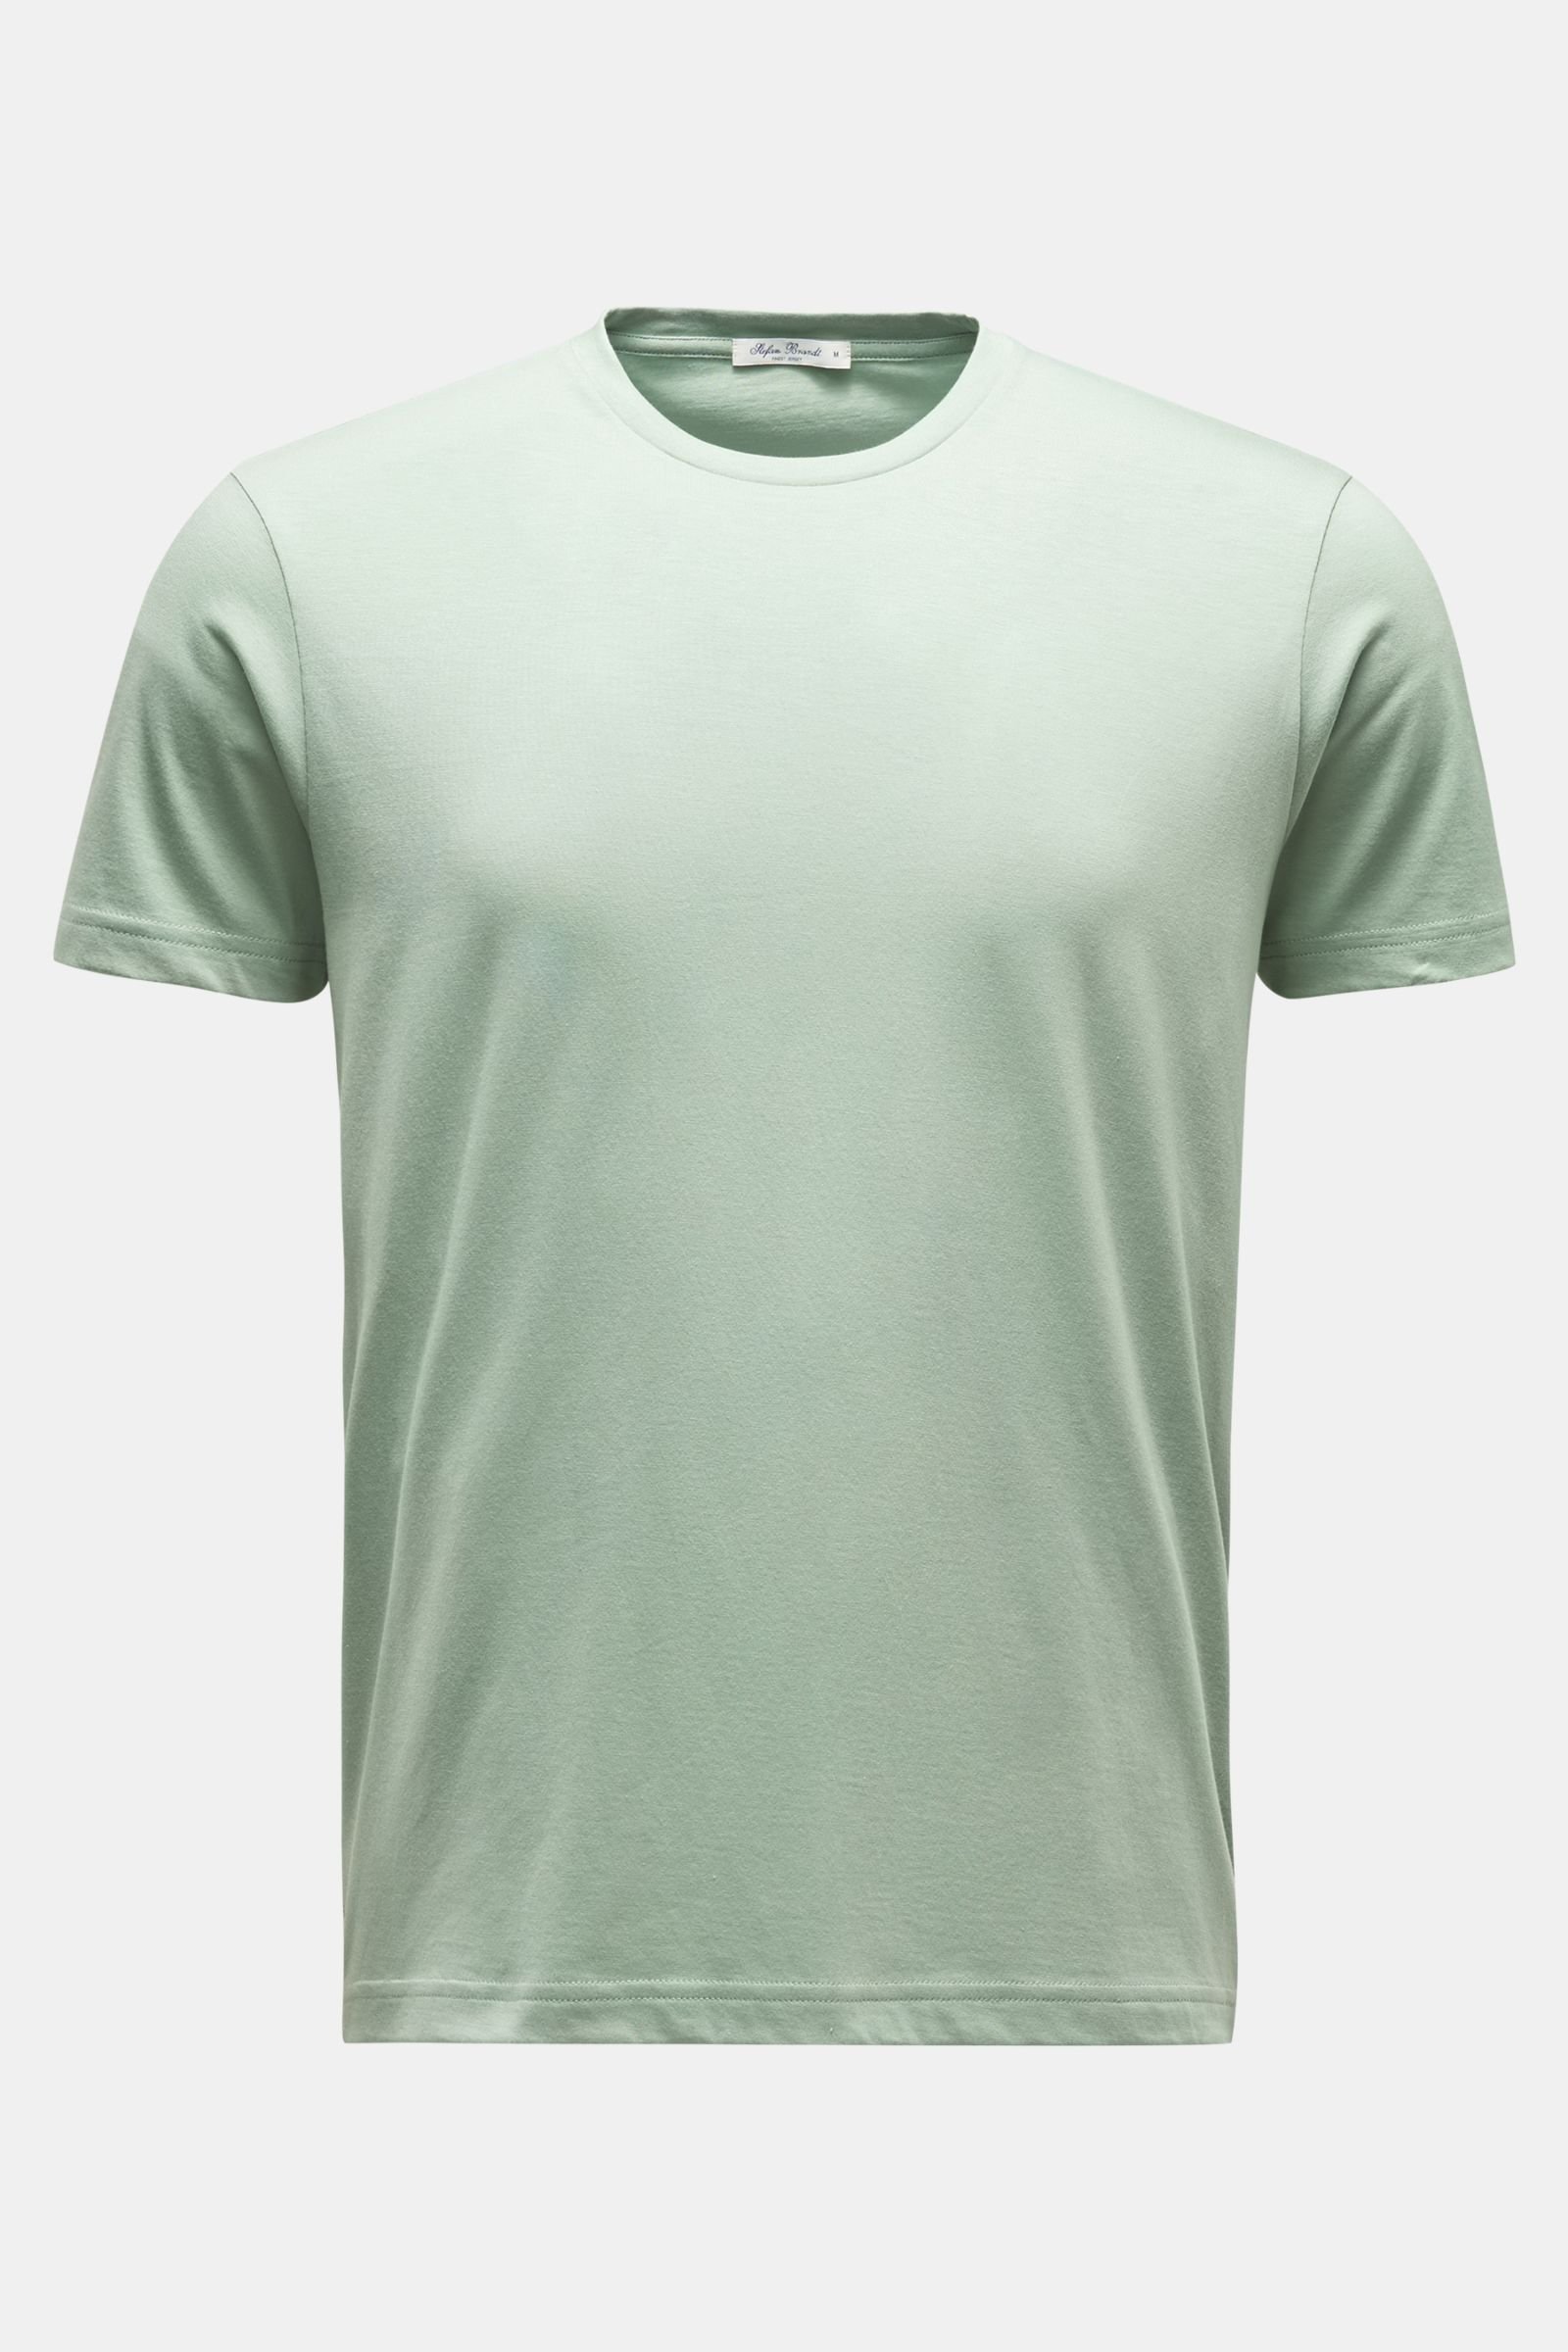 Crew neck T-shirt 'Enno' mint green